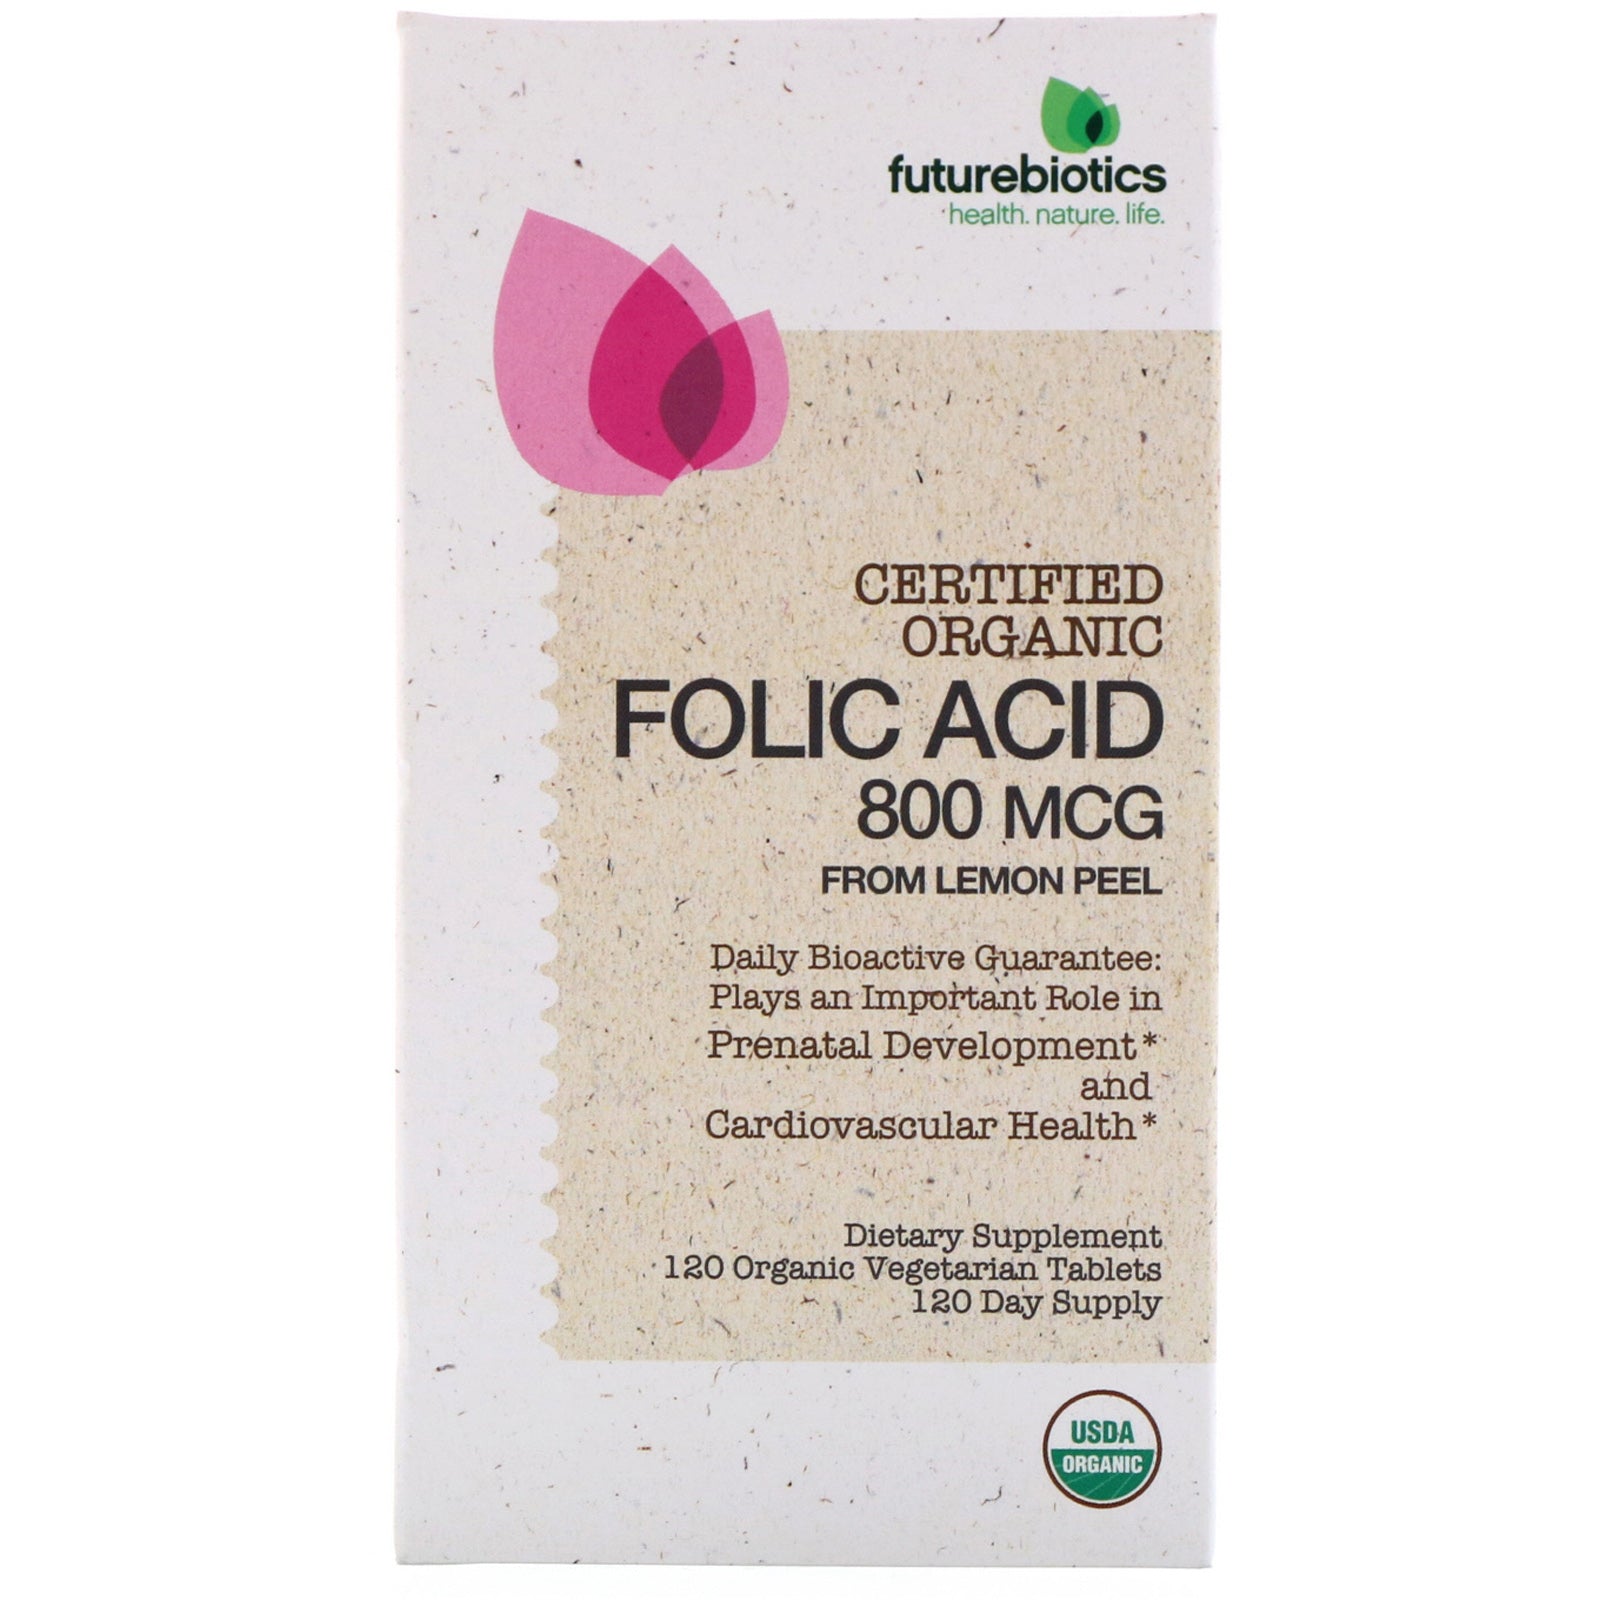 FutureBiotics, Folic Acid From Lemon Peel, 800 mcg, 120 Organic Vegetarian Tablets